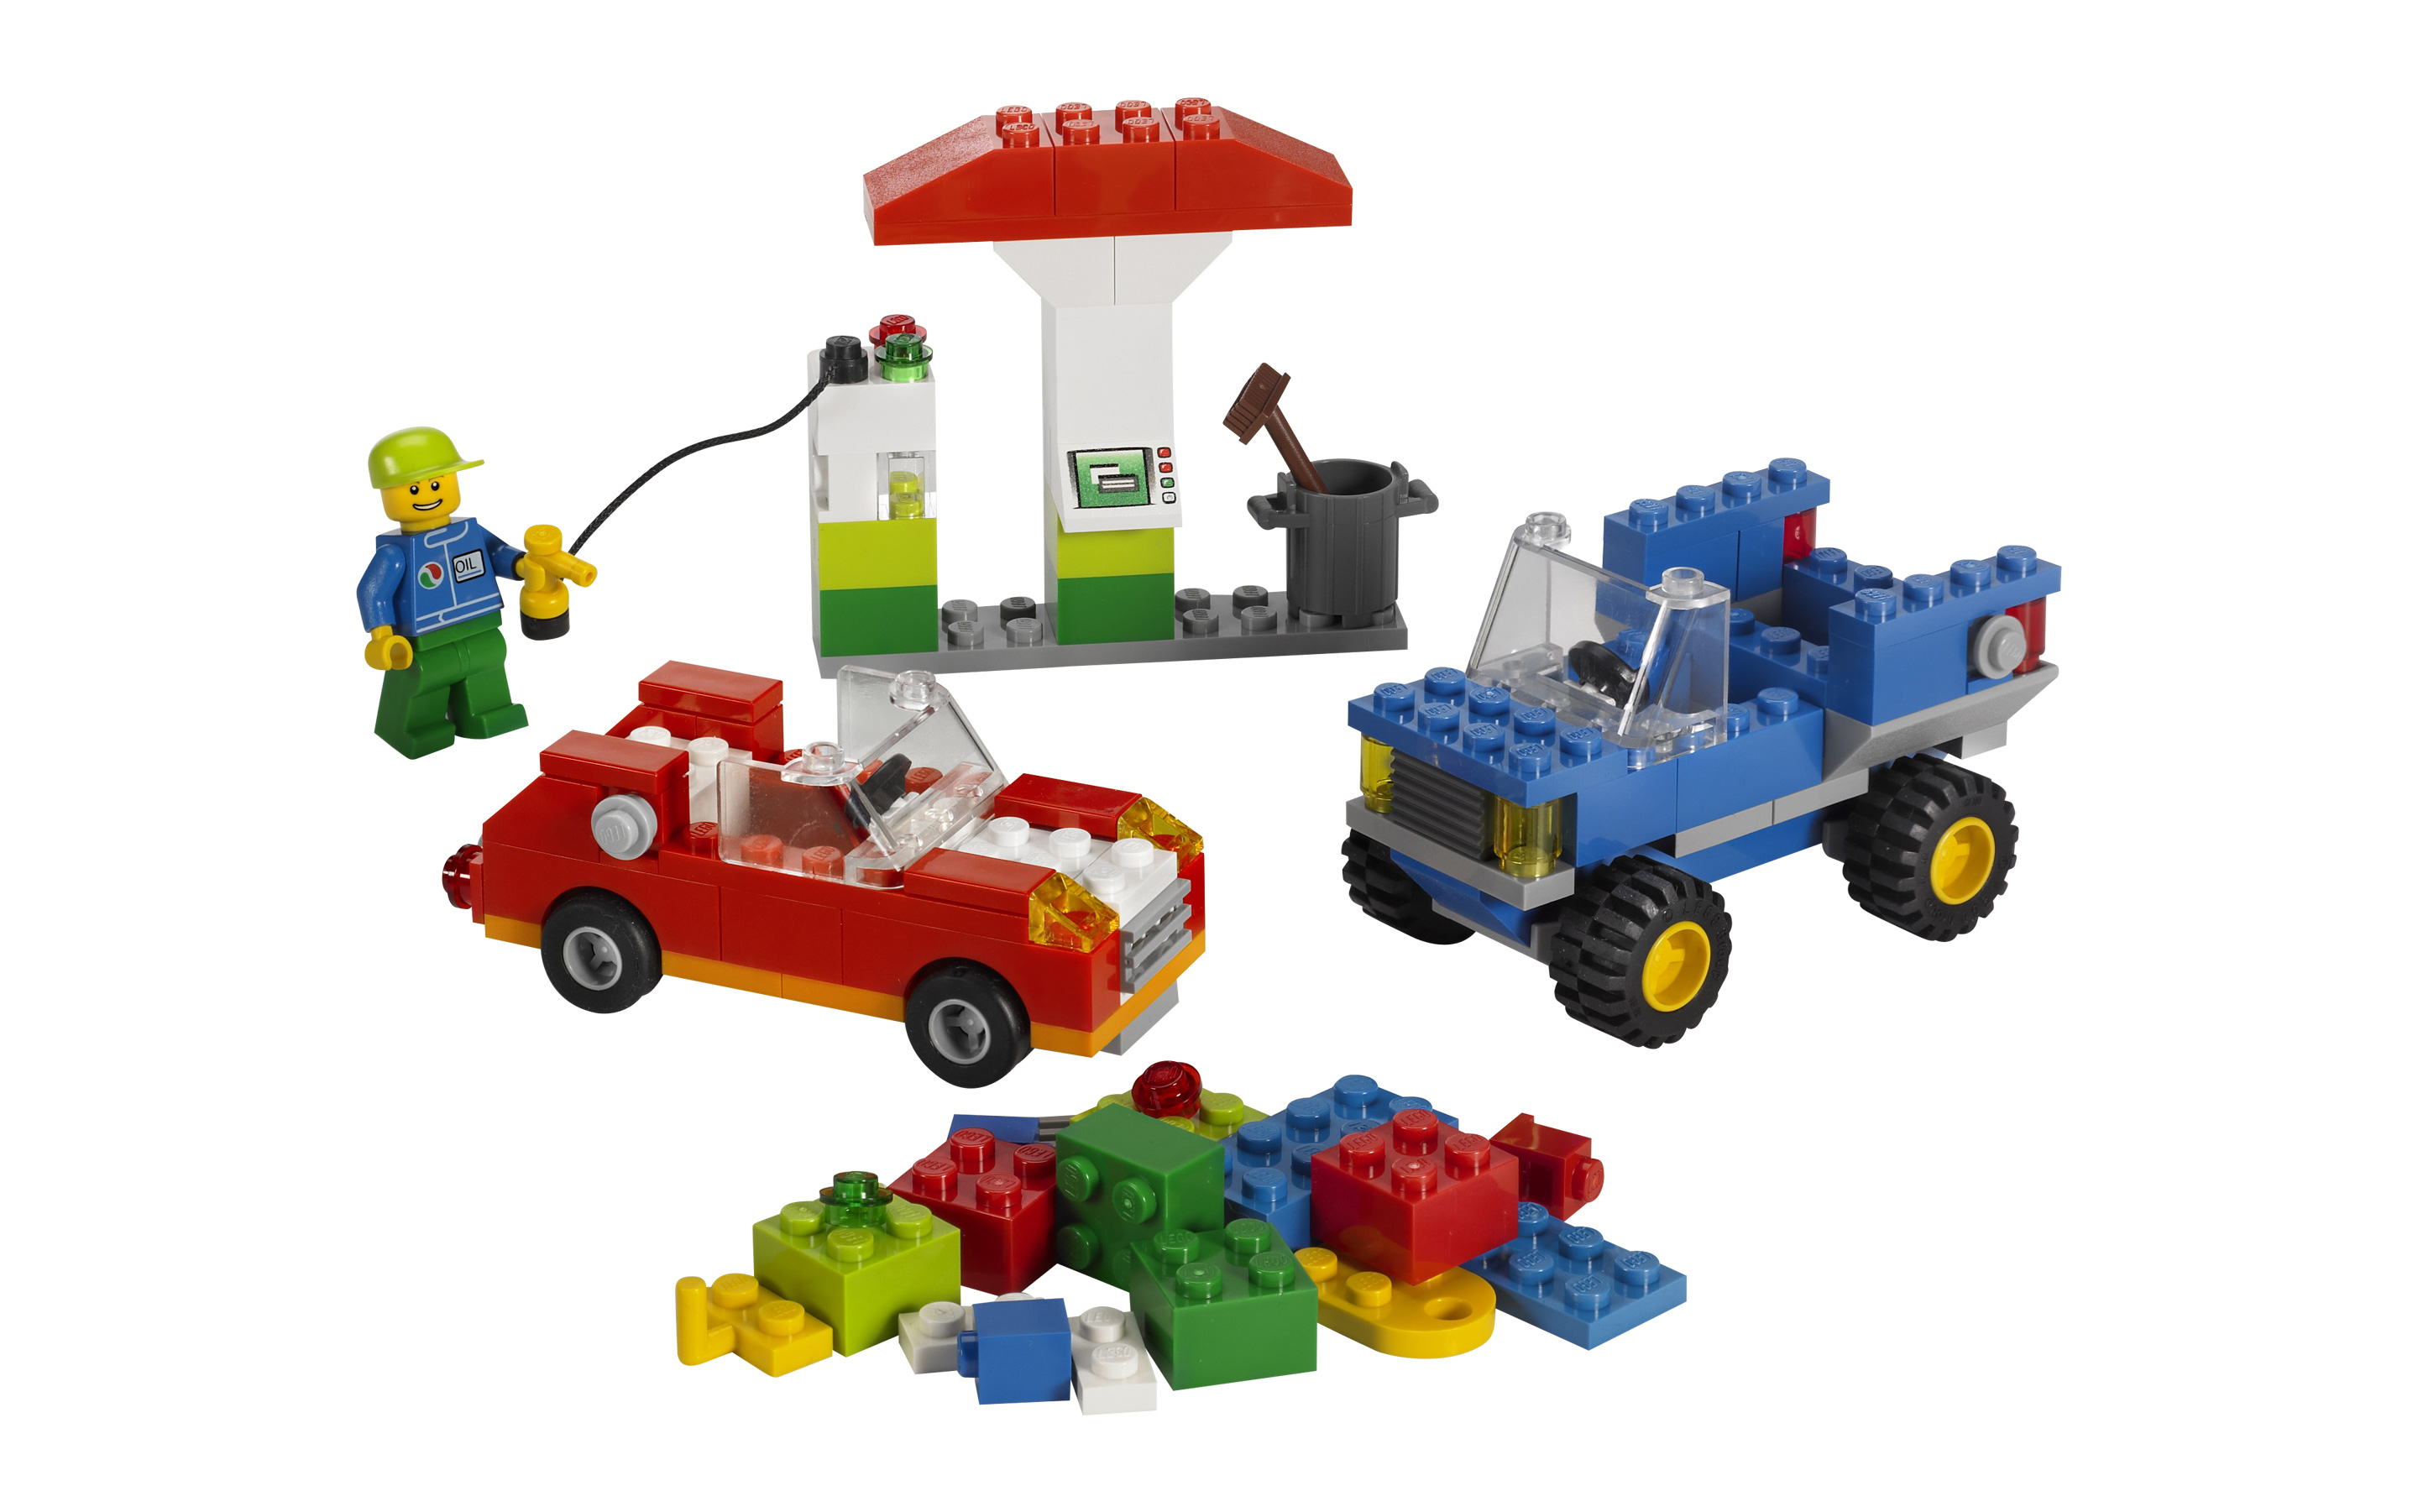 LEGO® Cars Building Set (5898): all